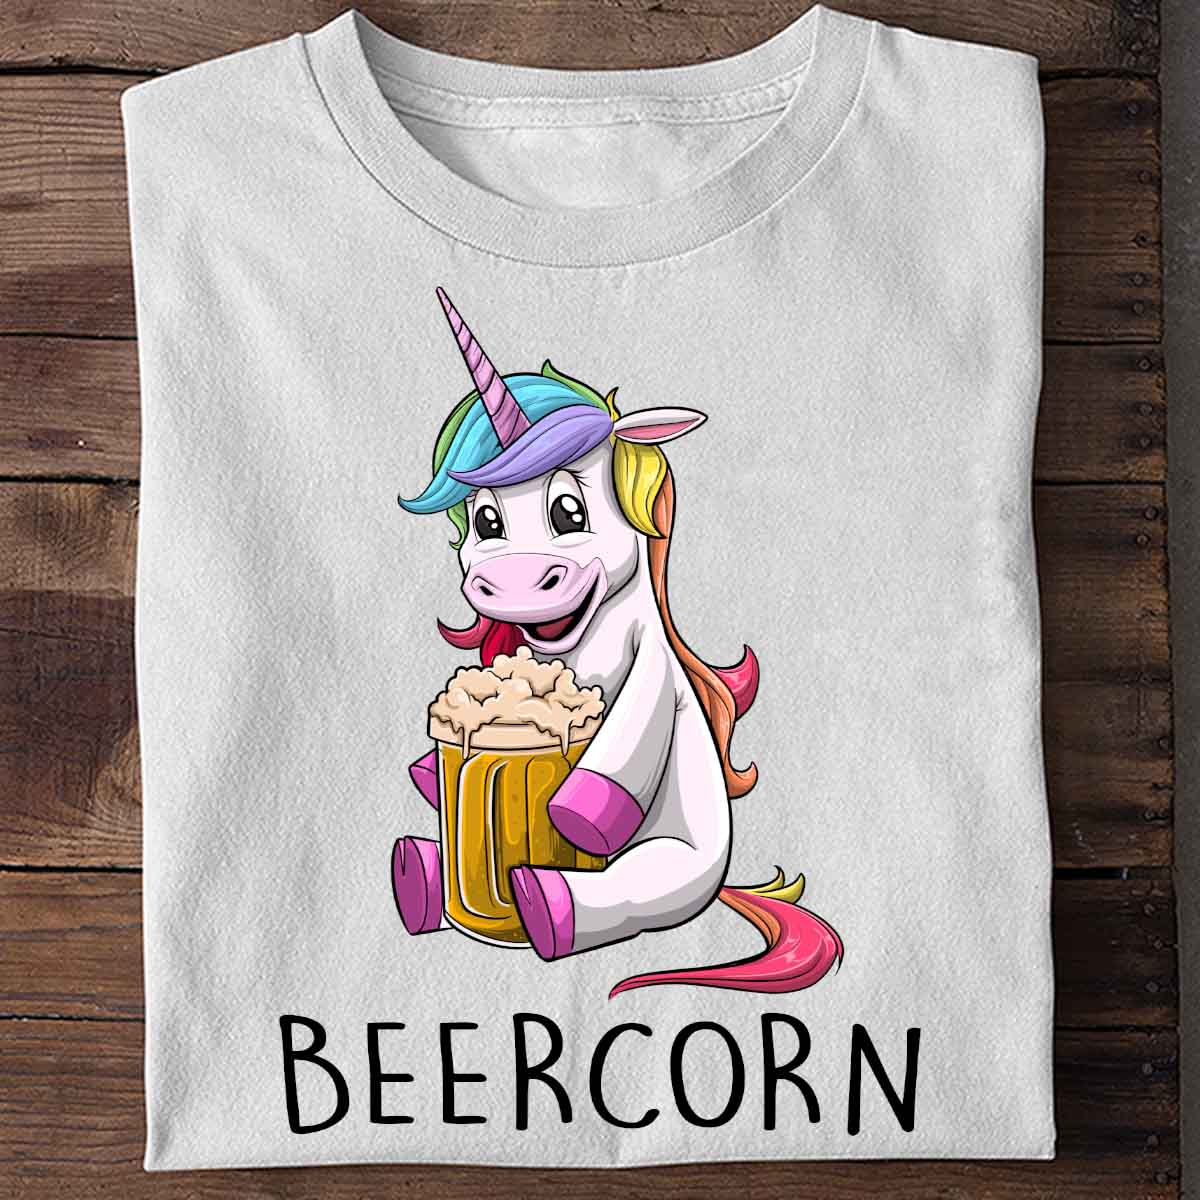 Beercorn - Shirt Unisex